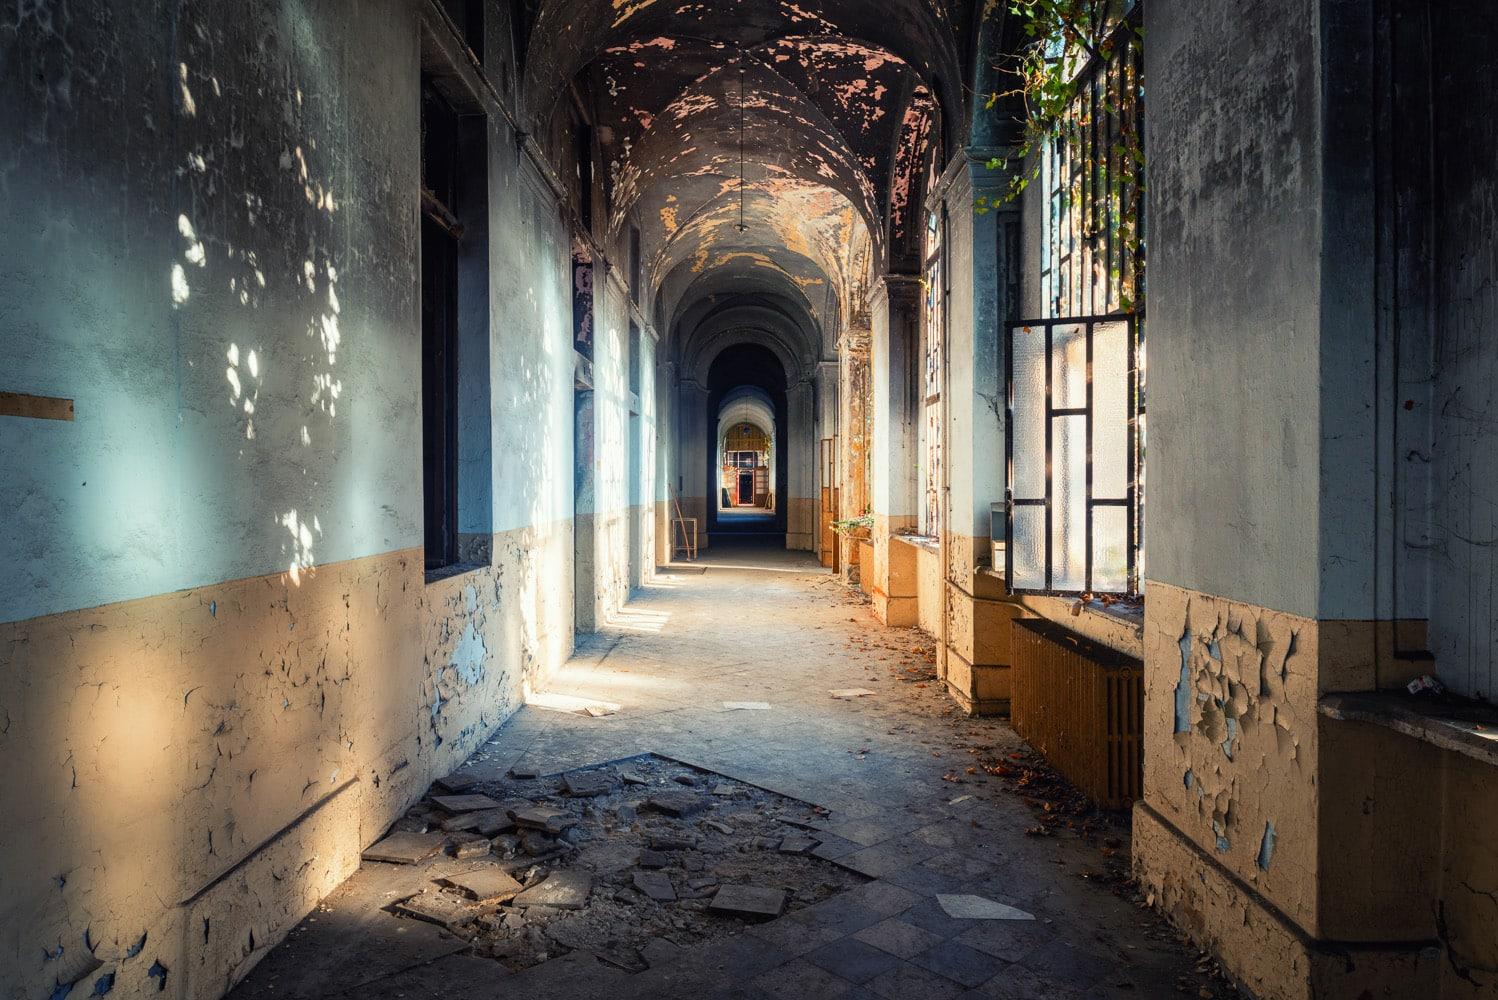 Bruciato by Gina Soden  - Interior photography, abandoned asylum, urbex